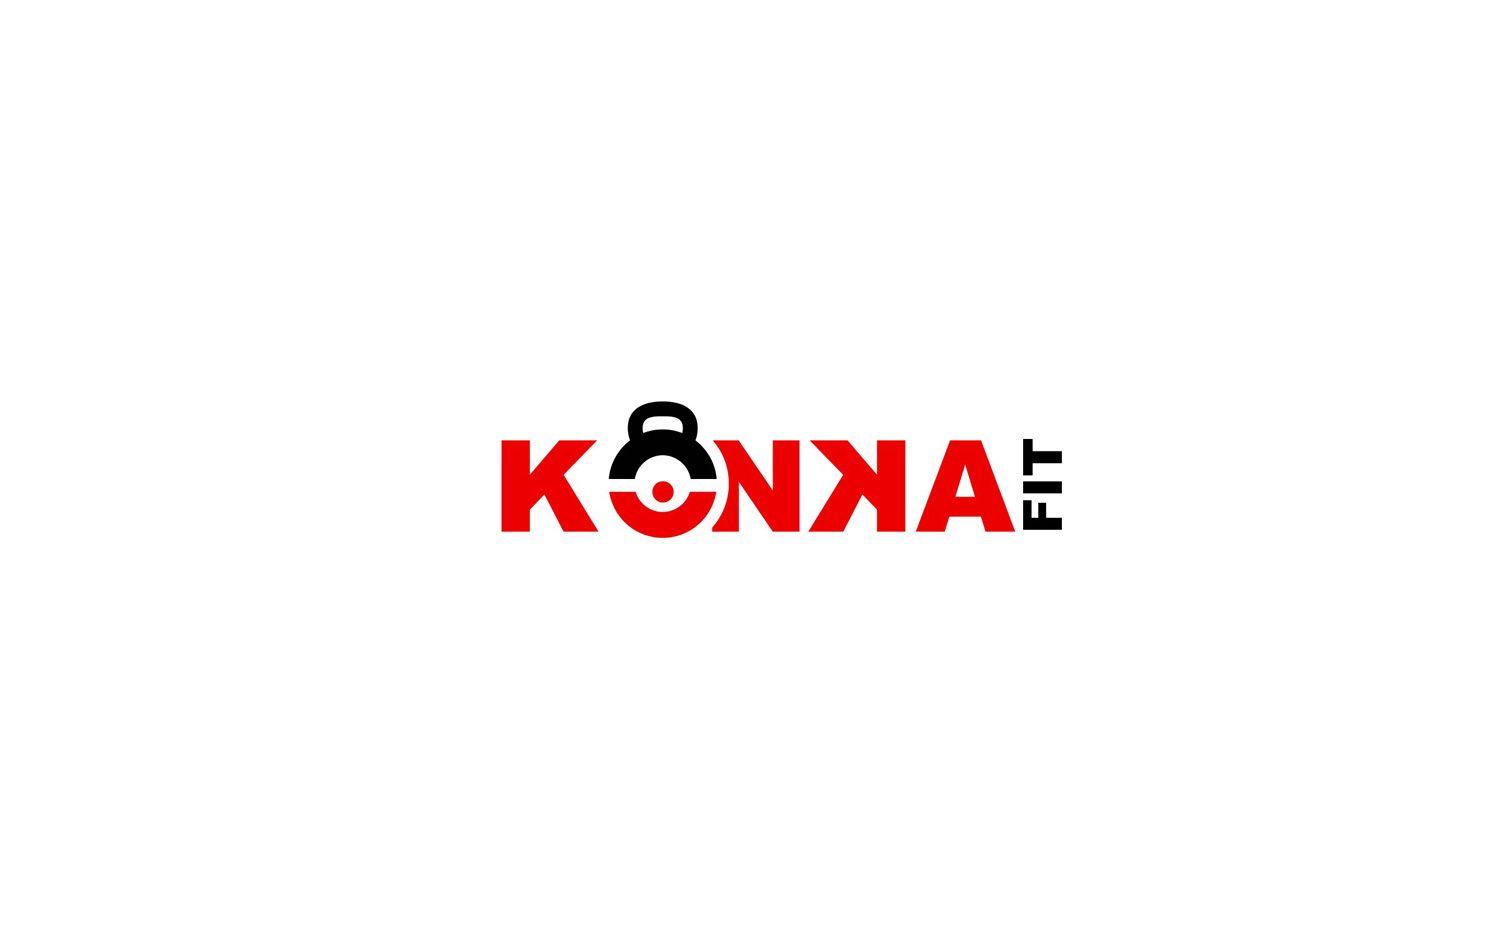 Konka Logo - Elegant, Playful, Health And Wellness Logo Design for KONKA FIT